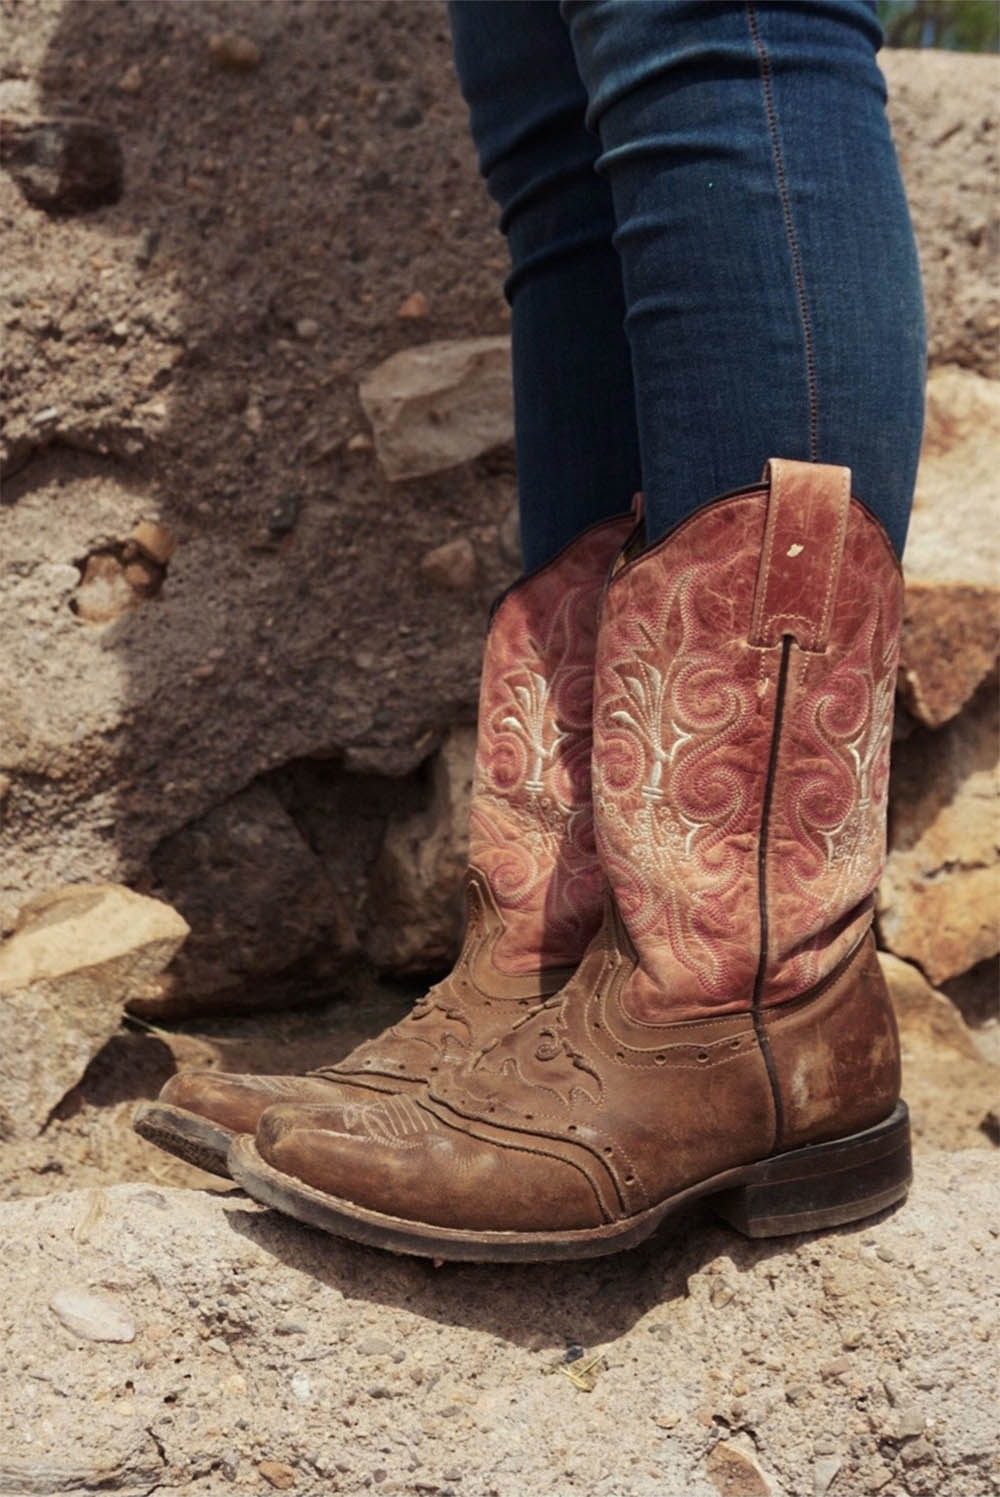 Woman wearing cowboy boots